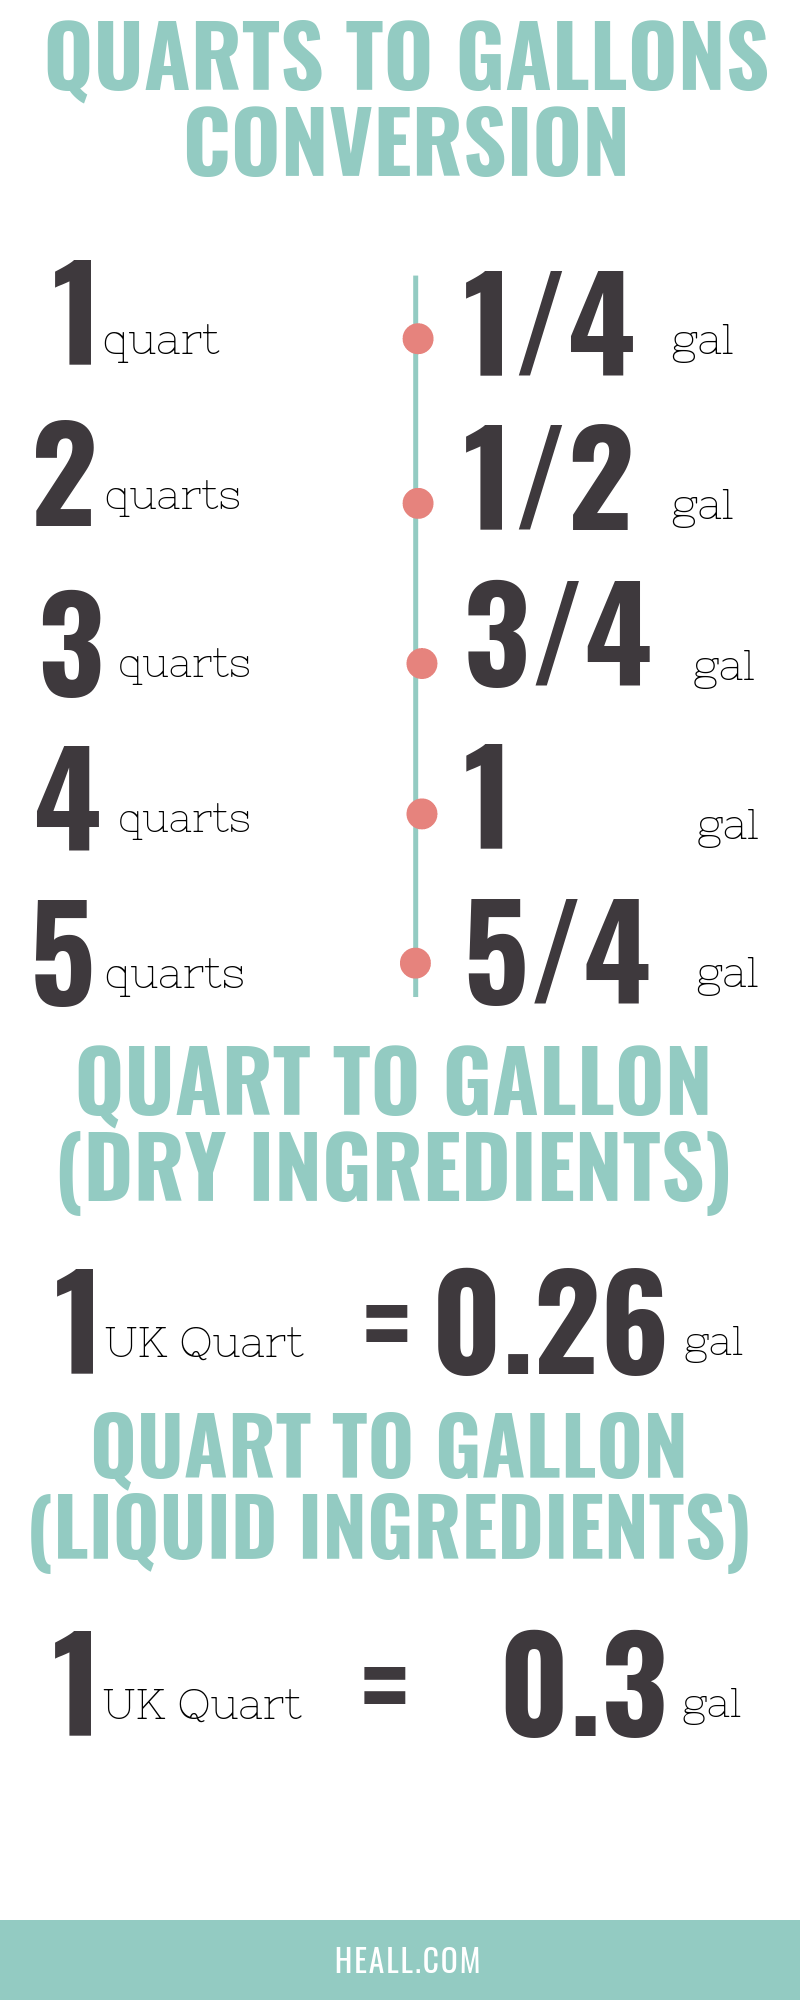 Quarts to gallons conversion